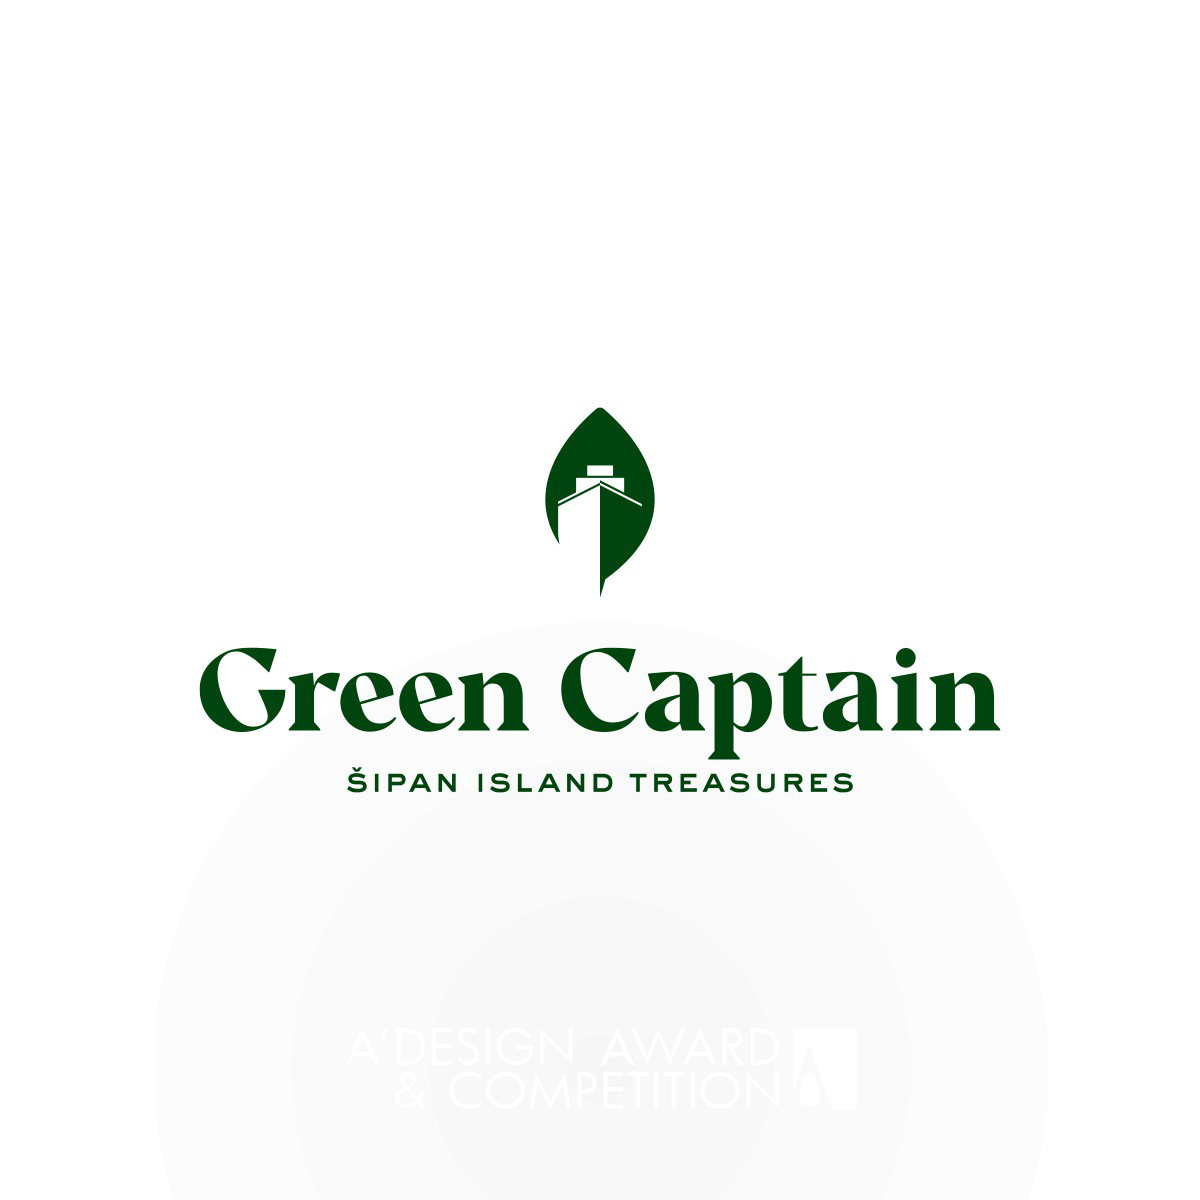 Green Captain  Sipan Island Treasures by Anja Zambelli Colak